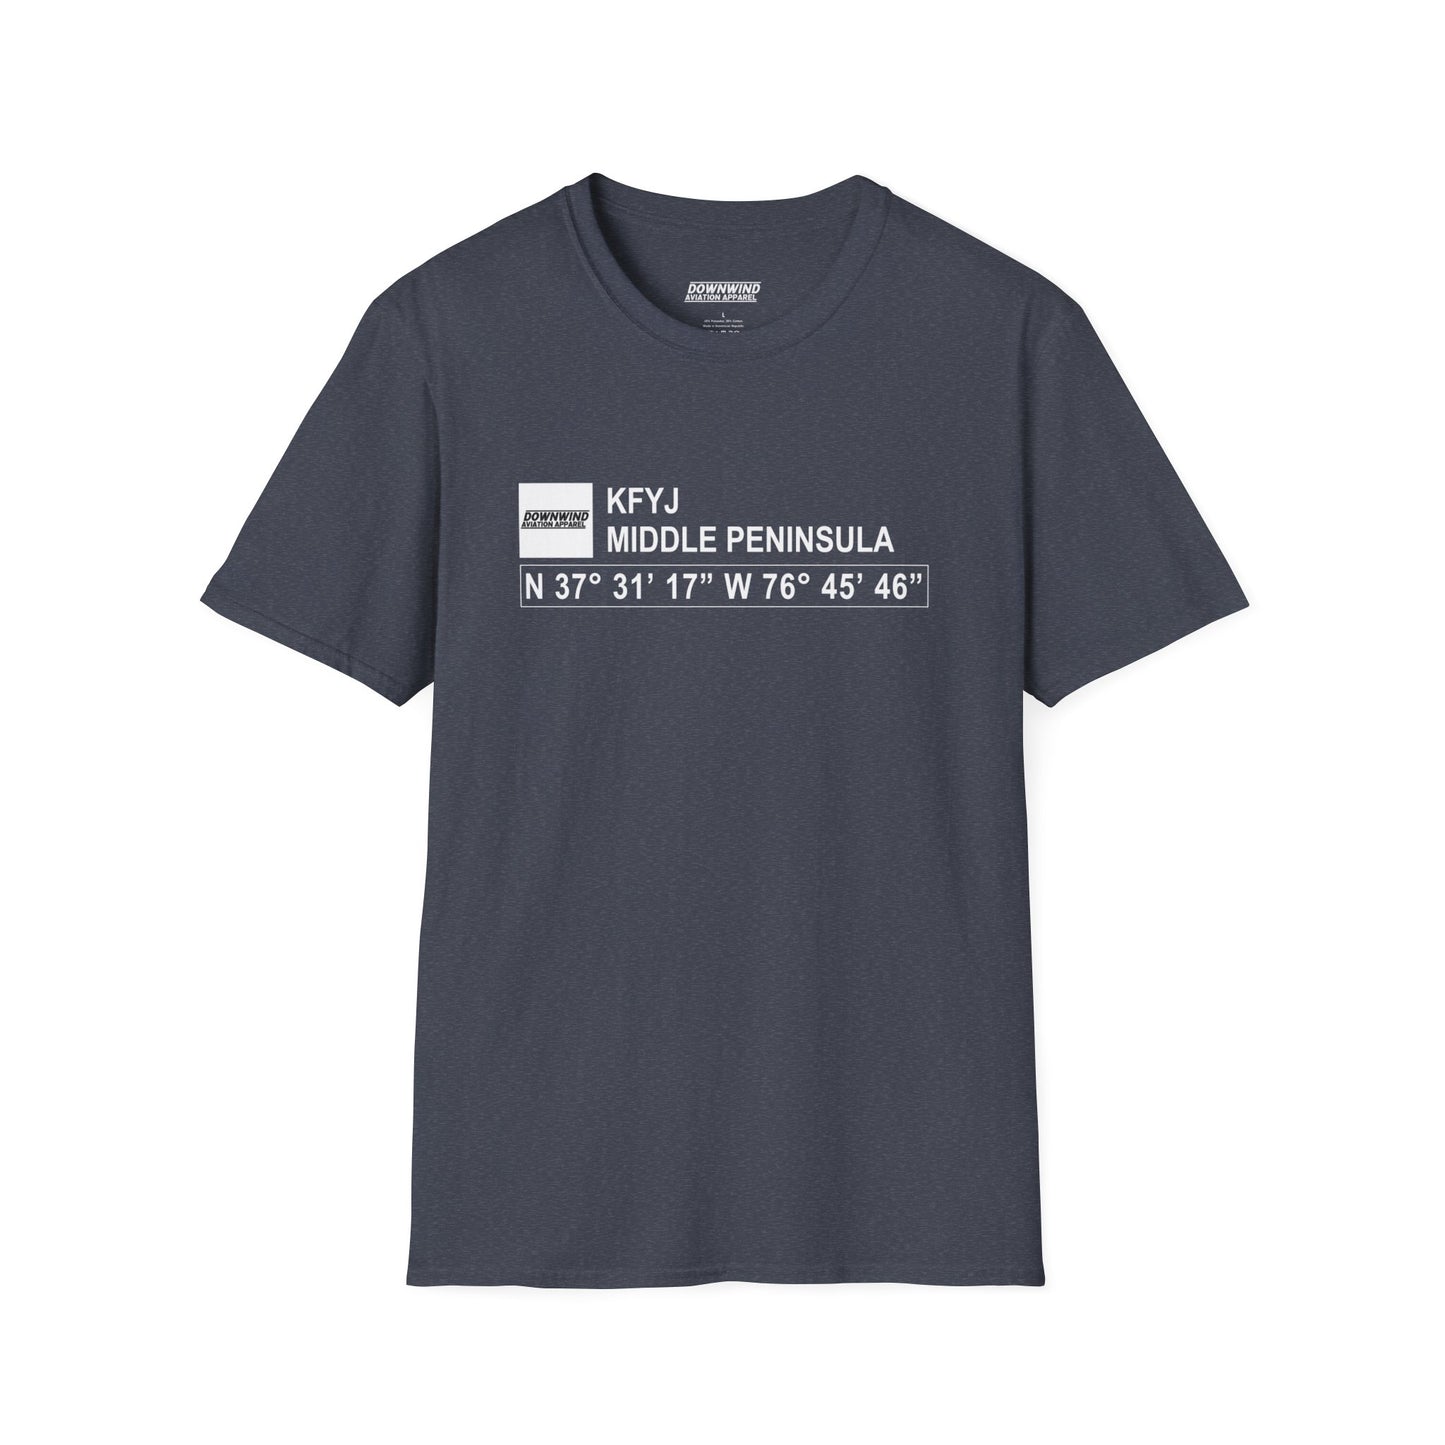 KFYJ / Middle Peninsula T-Shirt